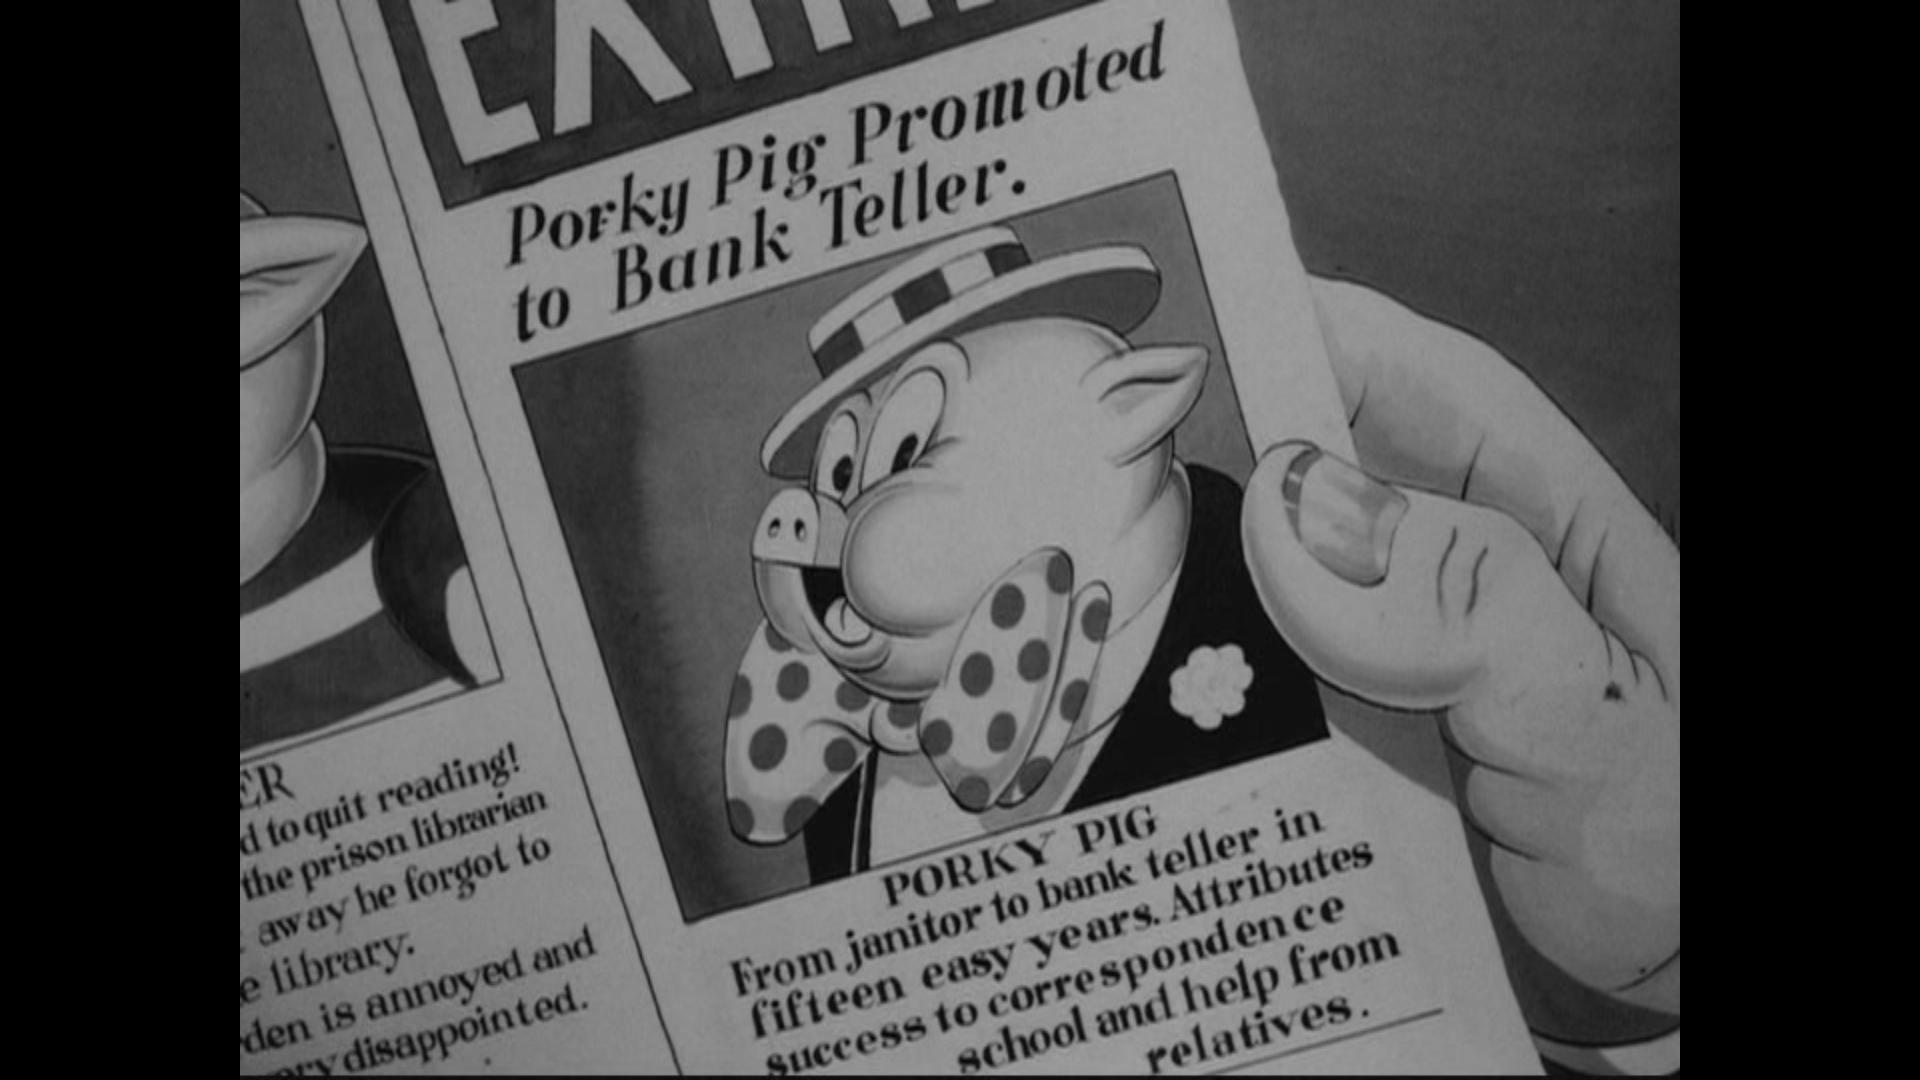 Porky's Double Trouble